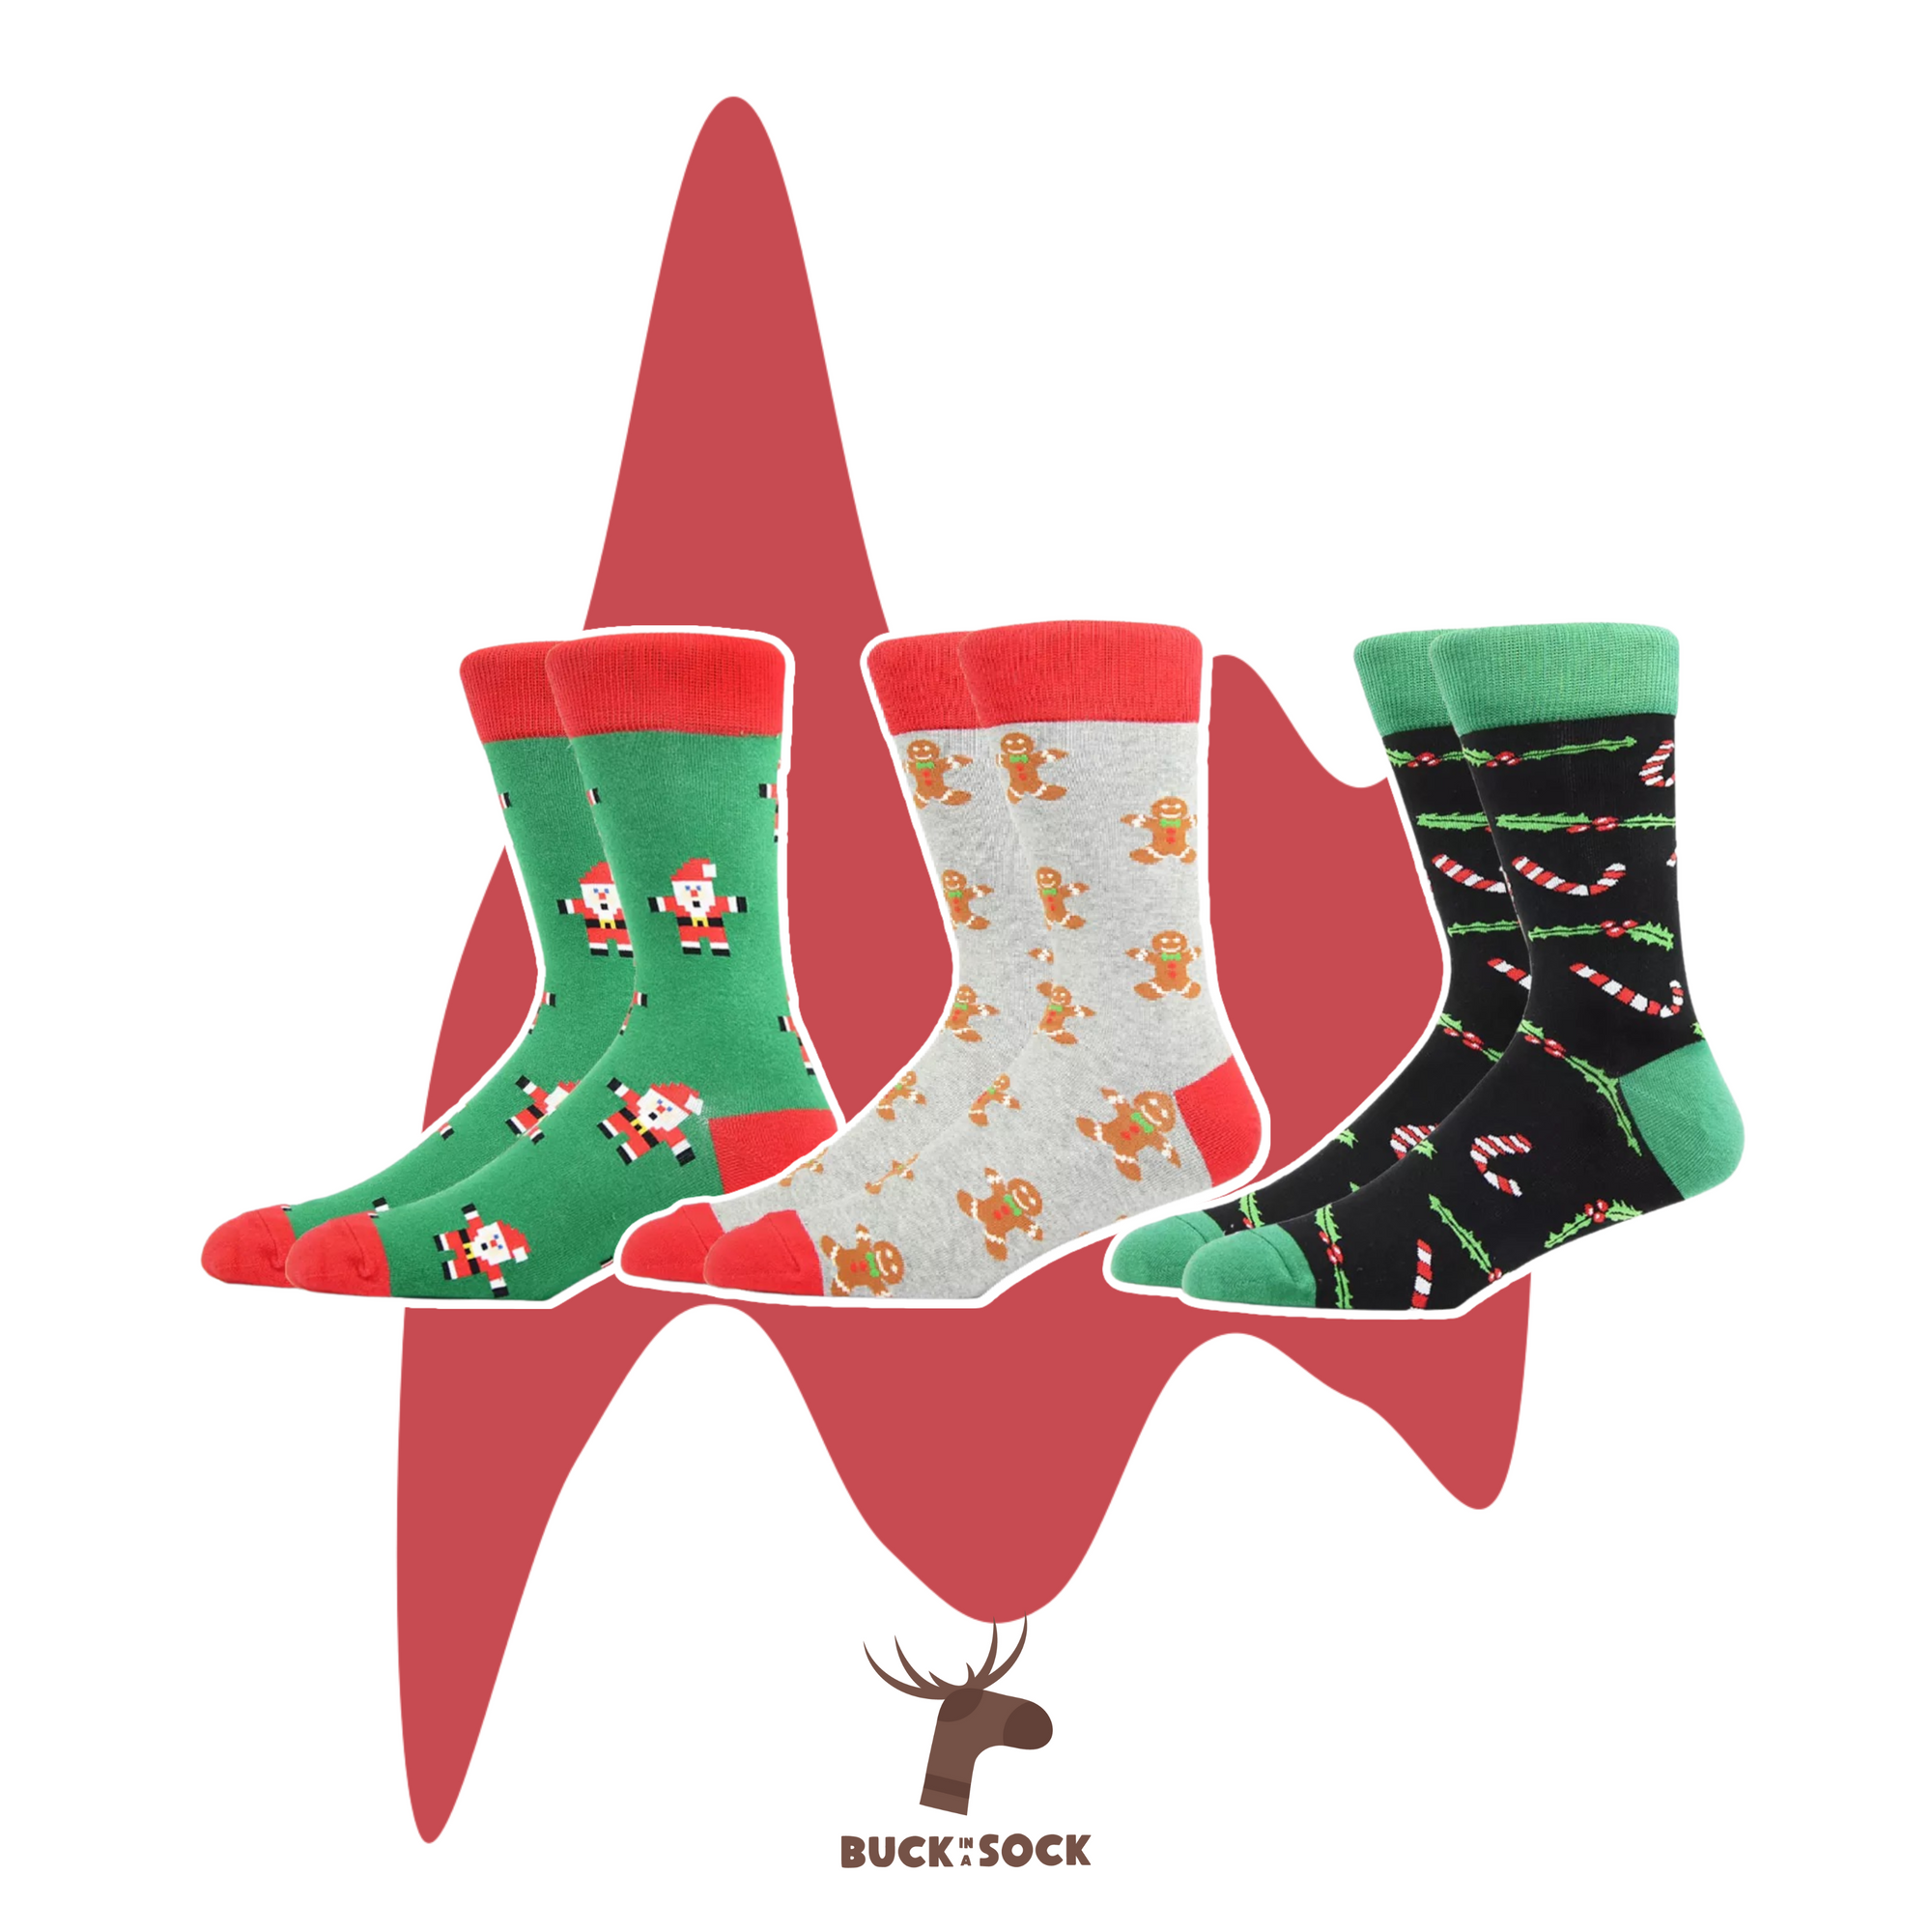 TINY CHRISTMAS - Buck in a sock